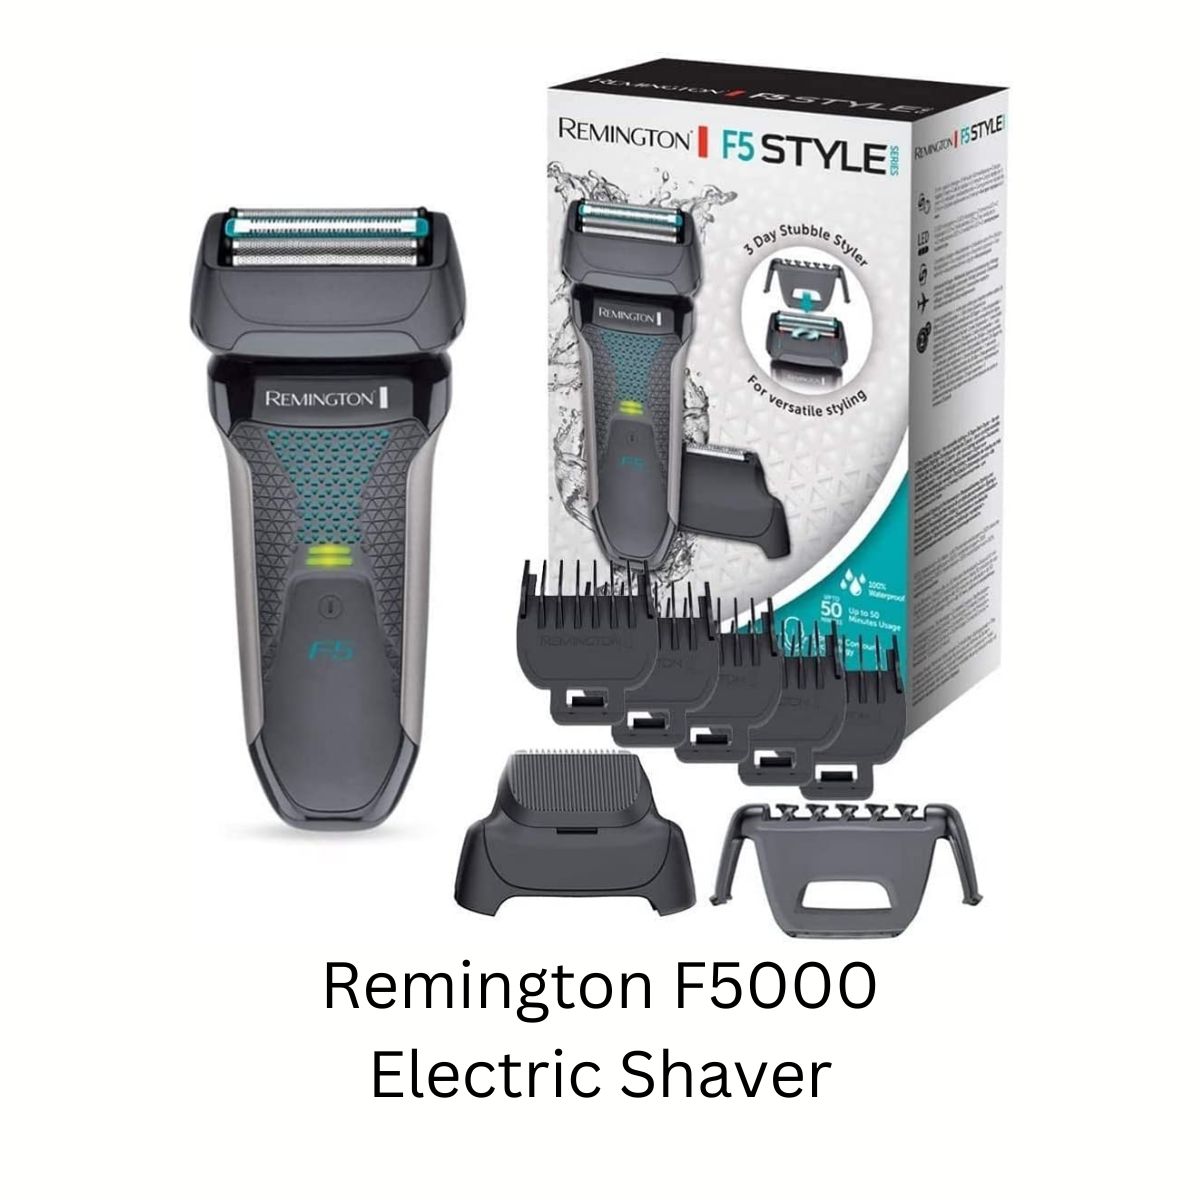 Remington F5000 electric shaver with presentation box